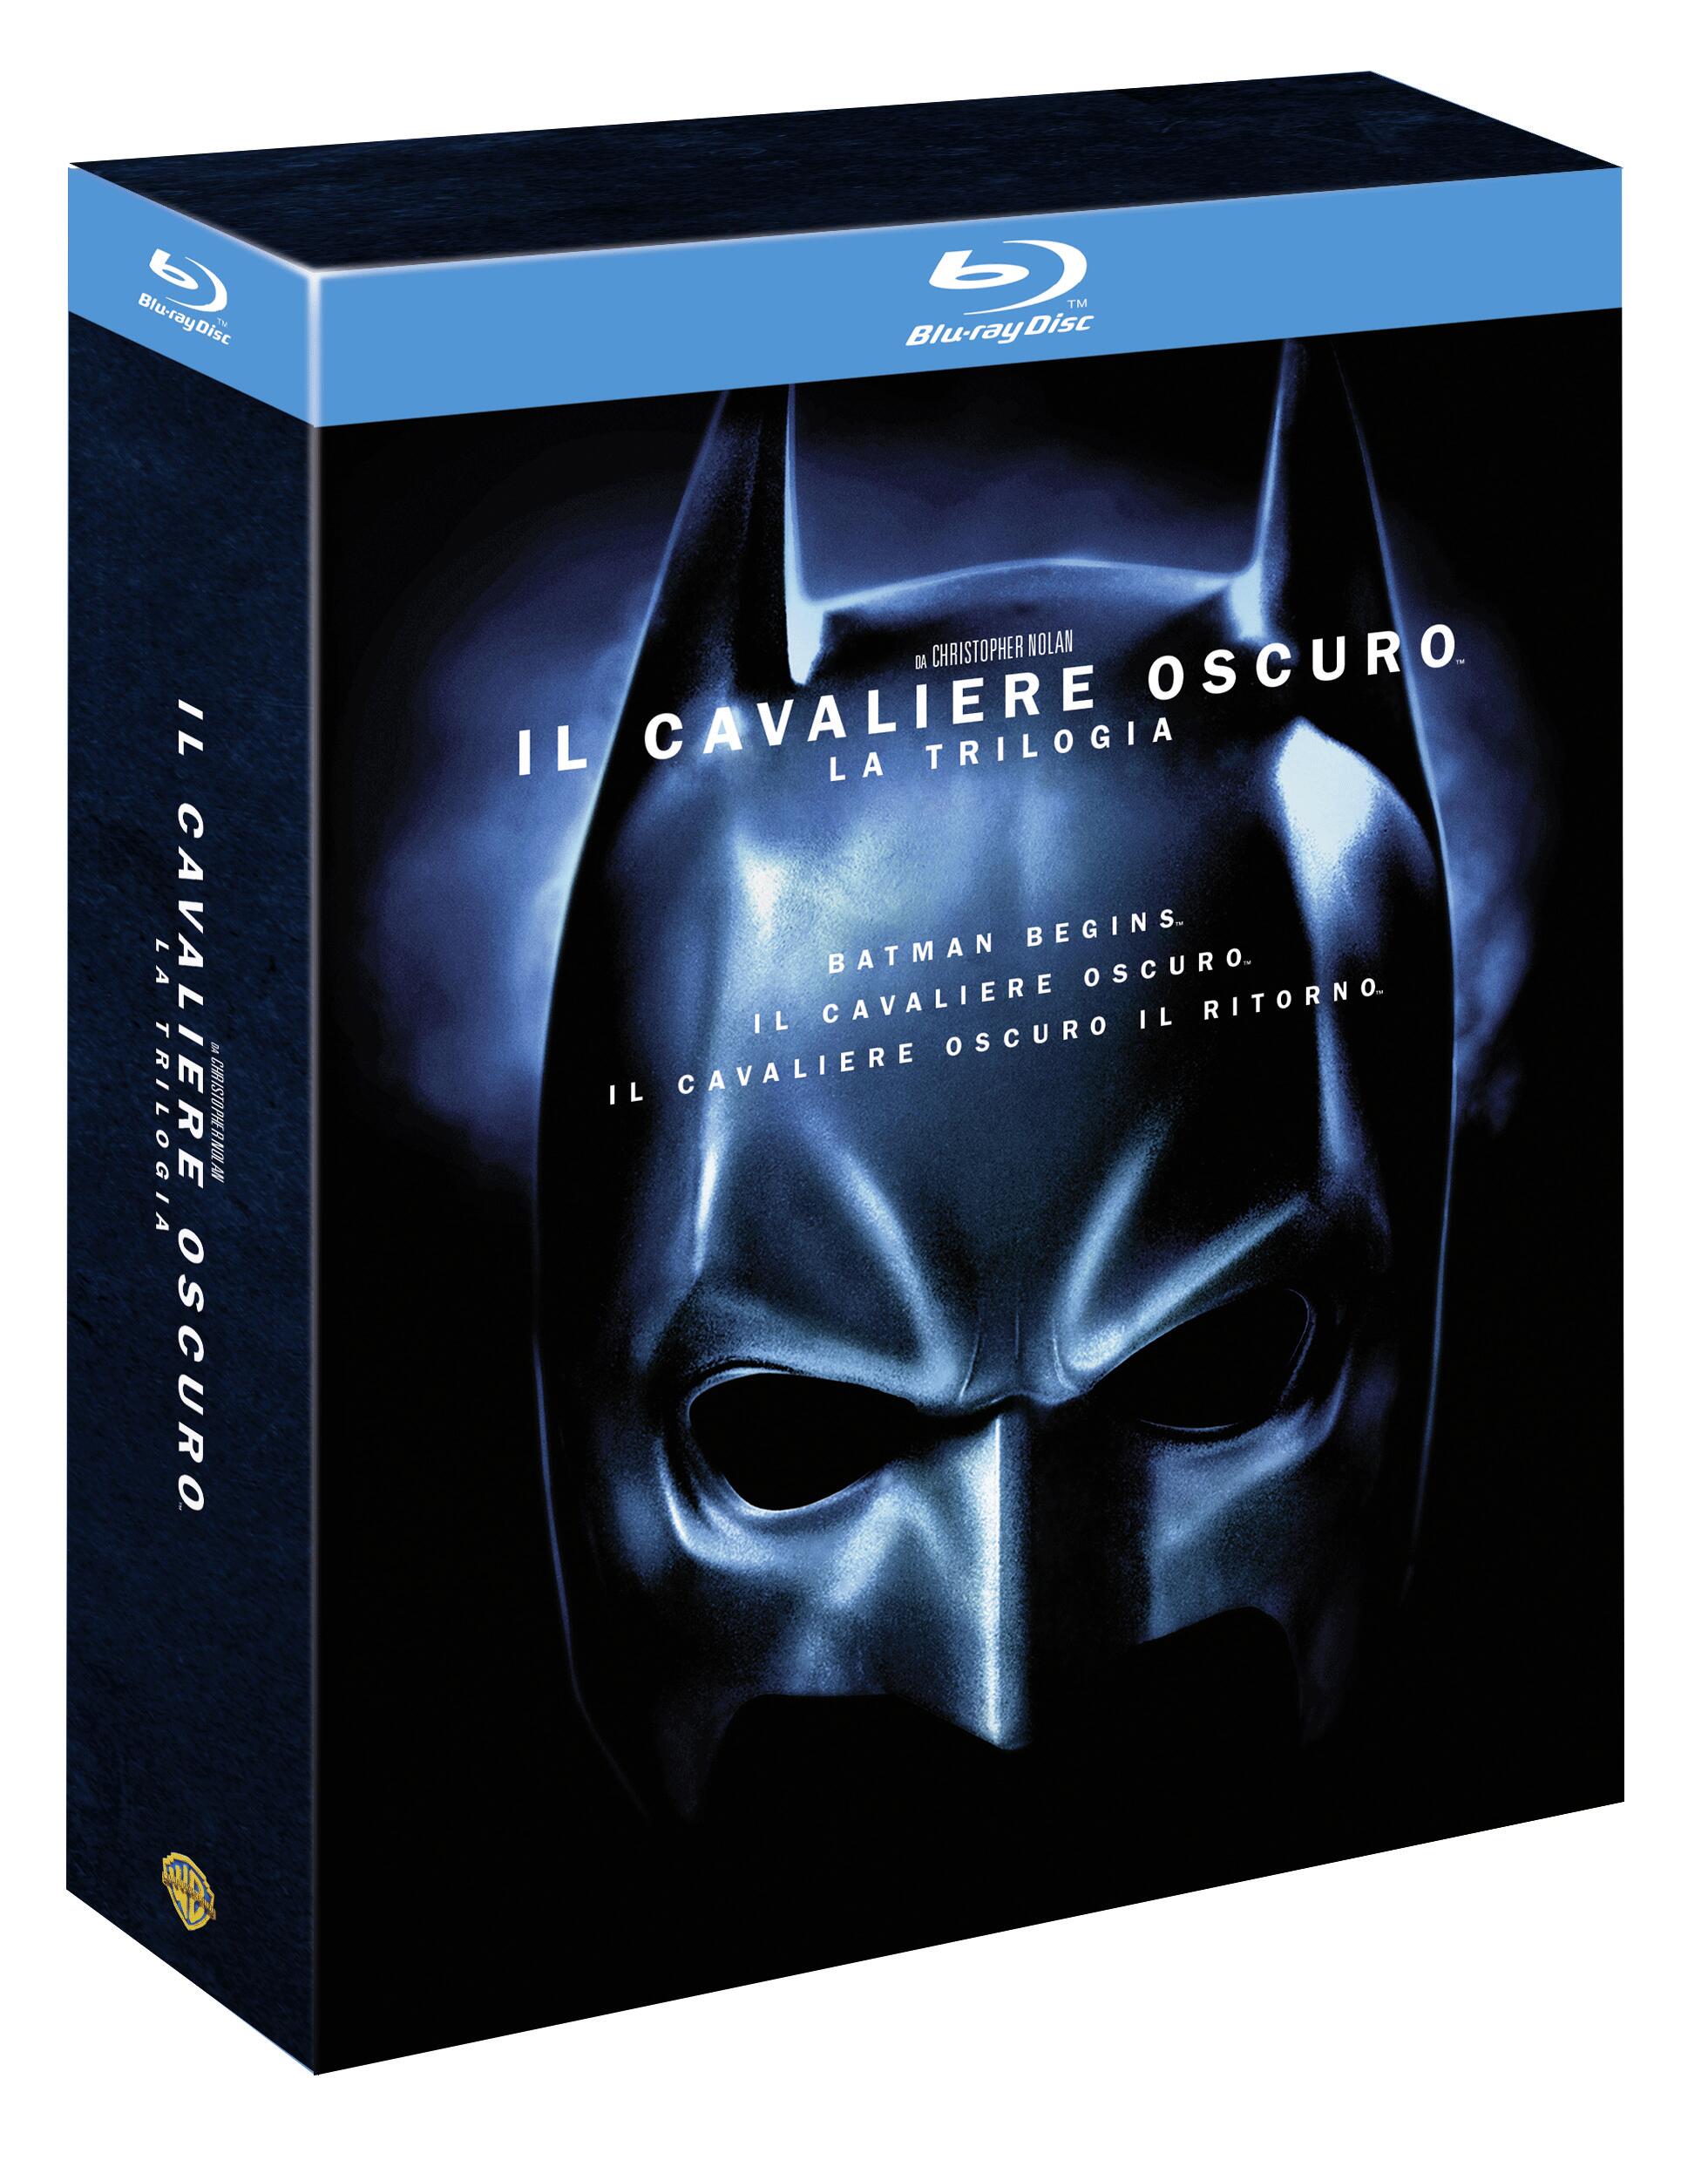 Amazoncom: The Batman: The Complete First Season DC